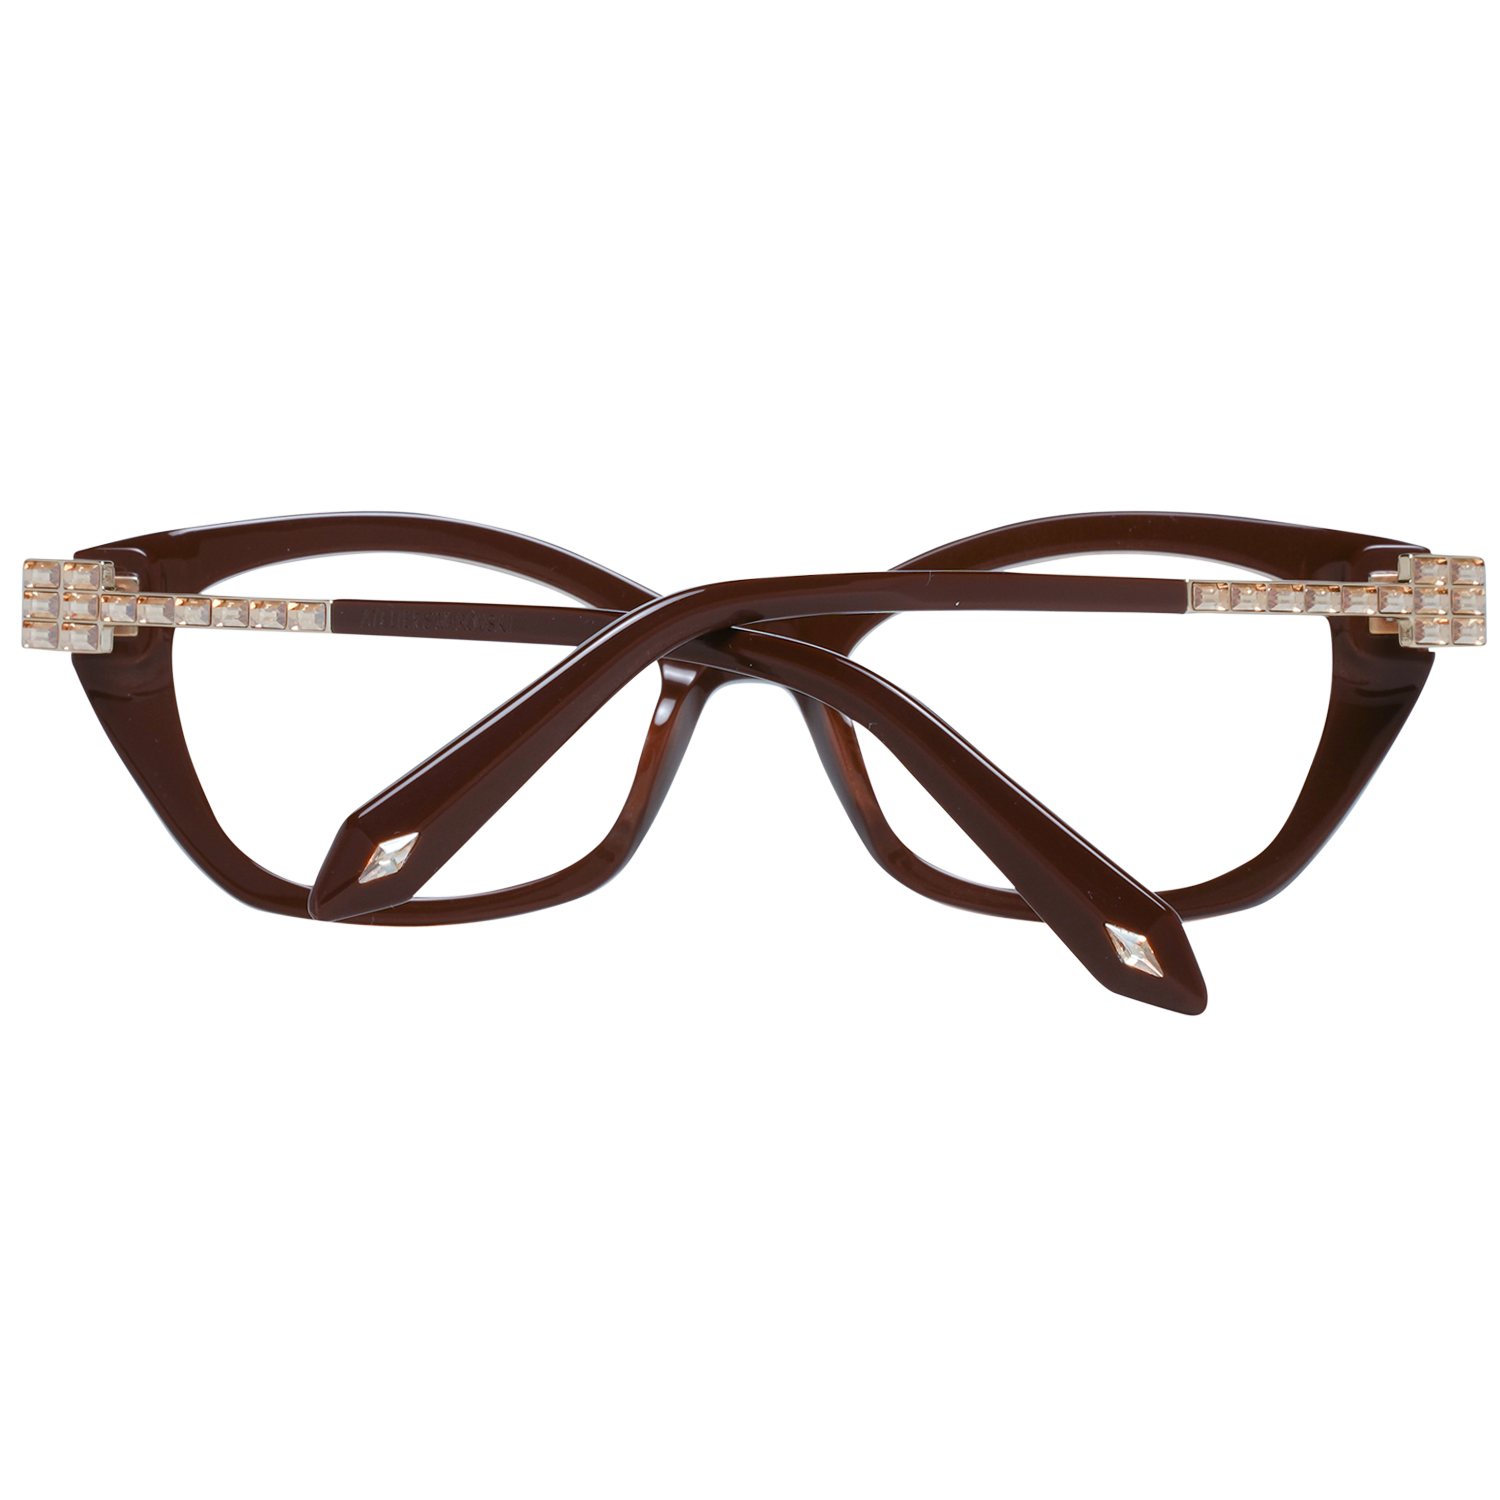 Atelier Swarovski Frames Atelier Swarovski Glasses Optical Frame SK5361-P 036 Eyeglasses Eyewear UK USA Australia 